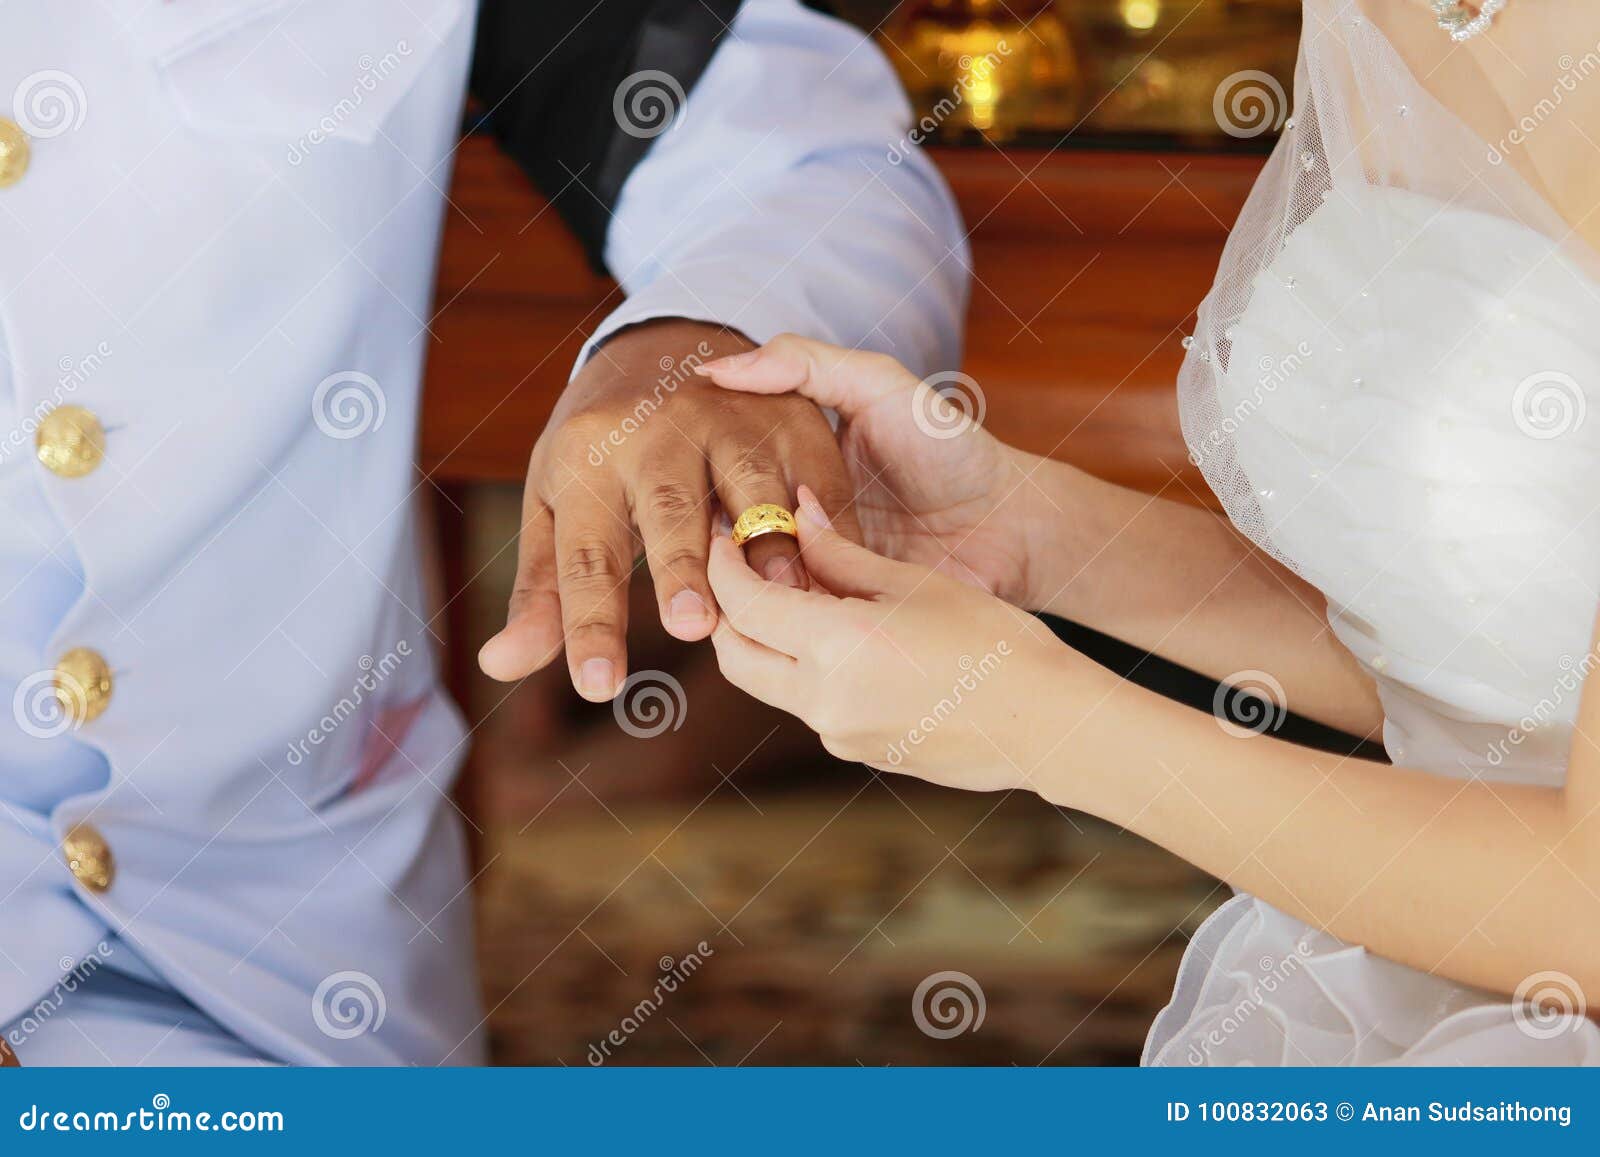 Bride Newlyweds Wearing Ring Groom S Finger Wedding Ceremony Bride Newlyweds Wearing Ring Groom S Finger Wedding 100832063 